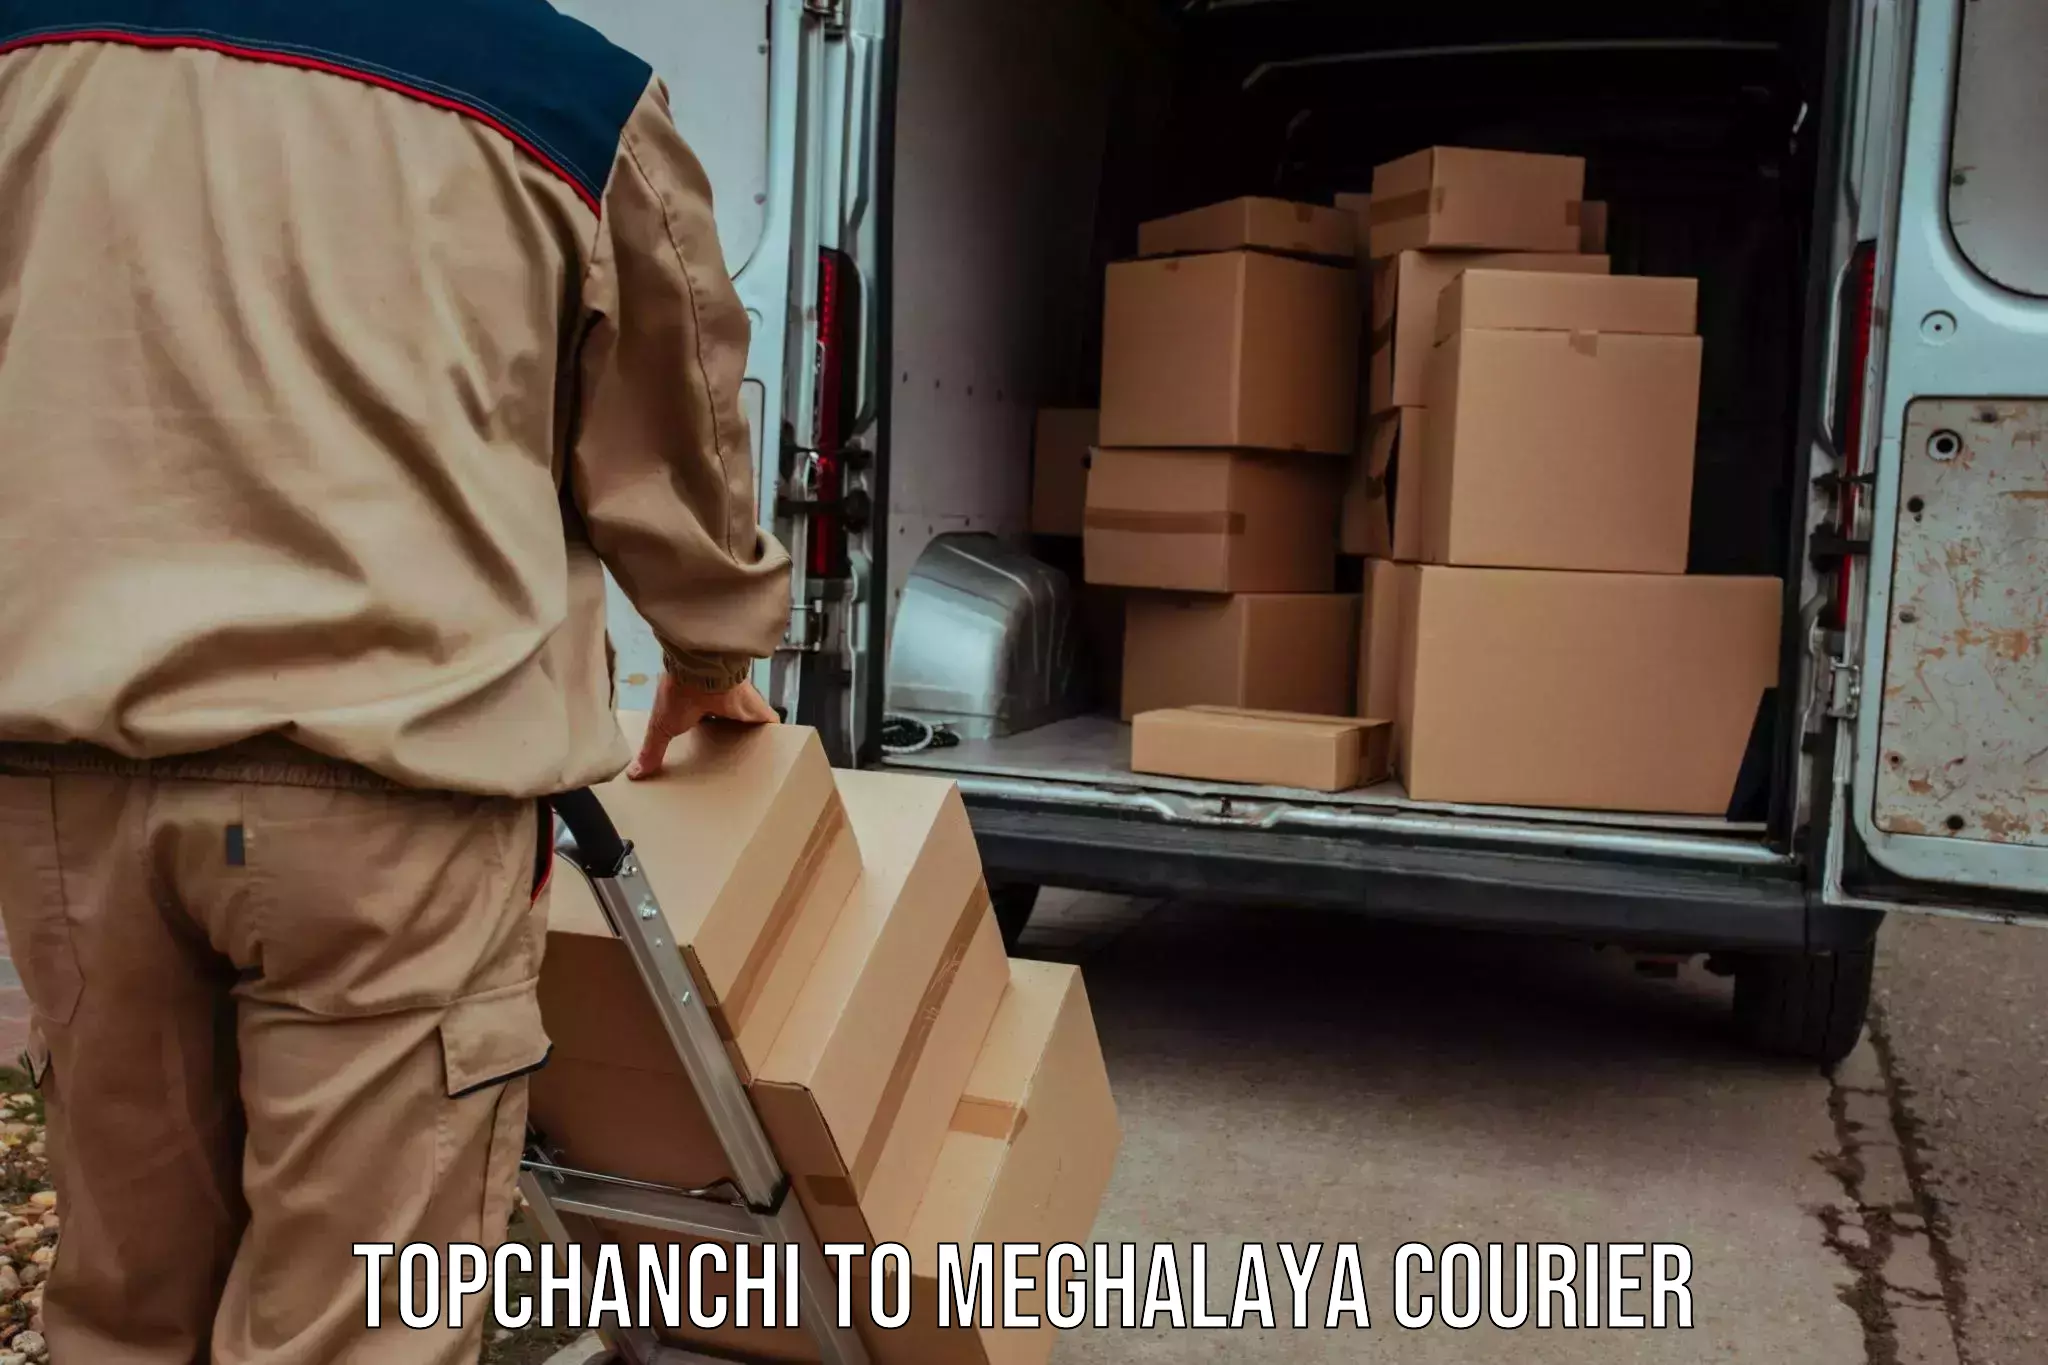 Digital courier platforms Topchanchi to Meghalaya